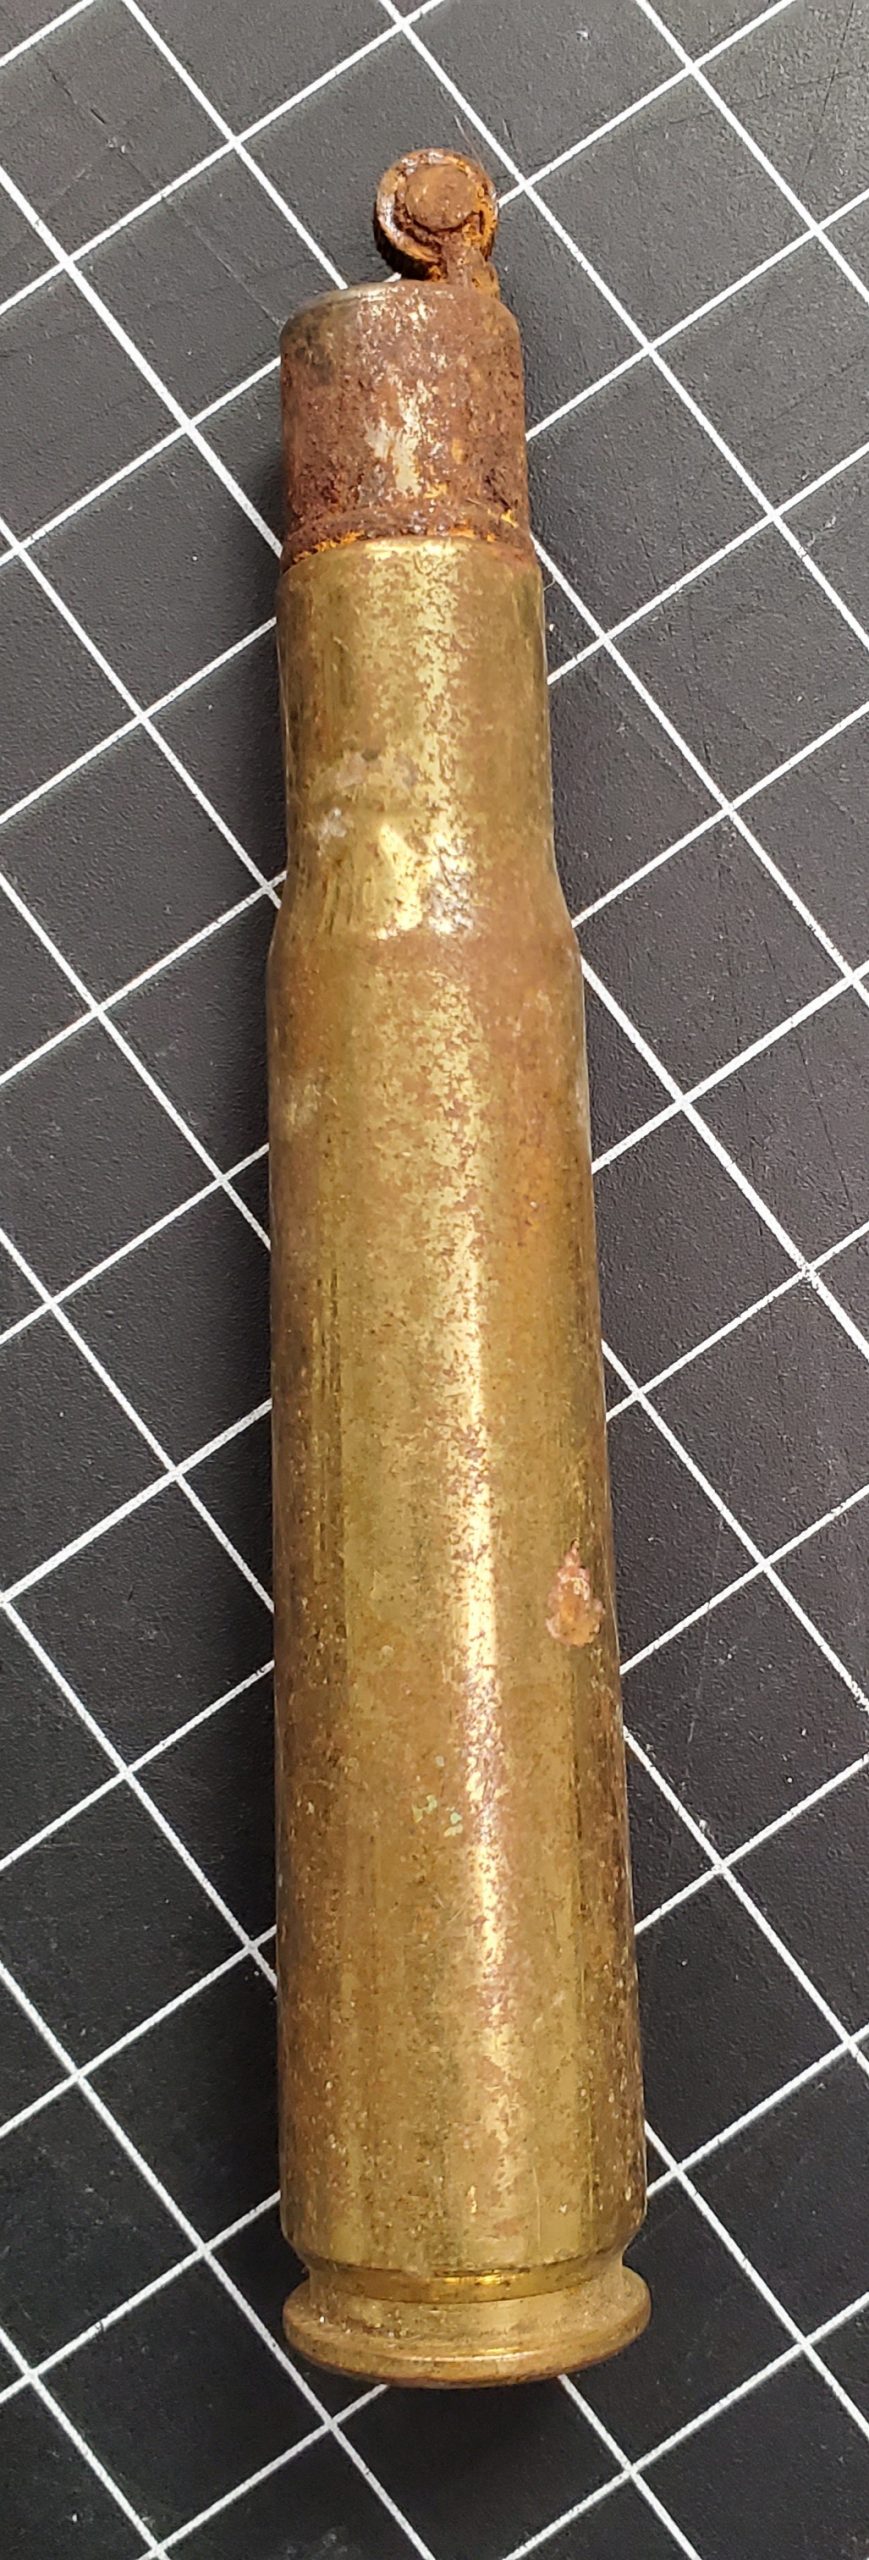 WWII Trench Art Bullet Lighter M43 50 Caliber Original US Navy 1940s